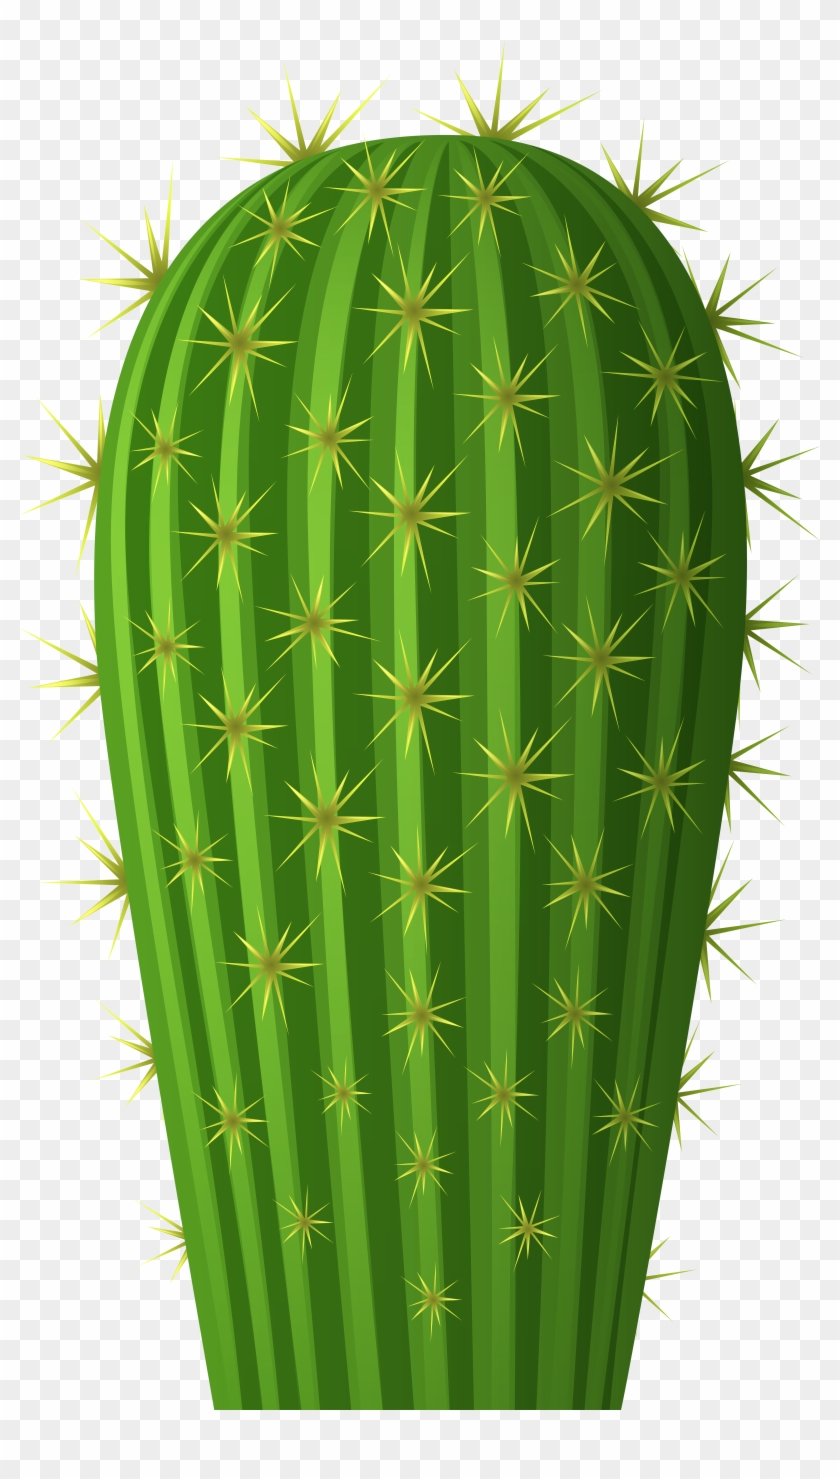 Cactus Png Clip Art Image - Cactus Png Transparent Png